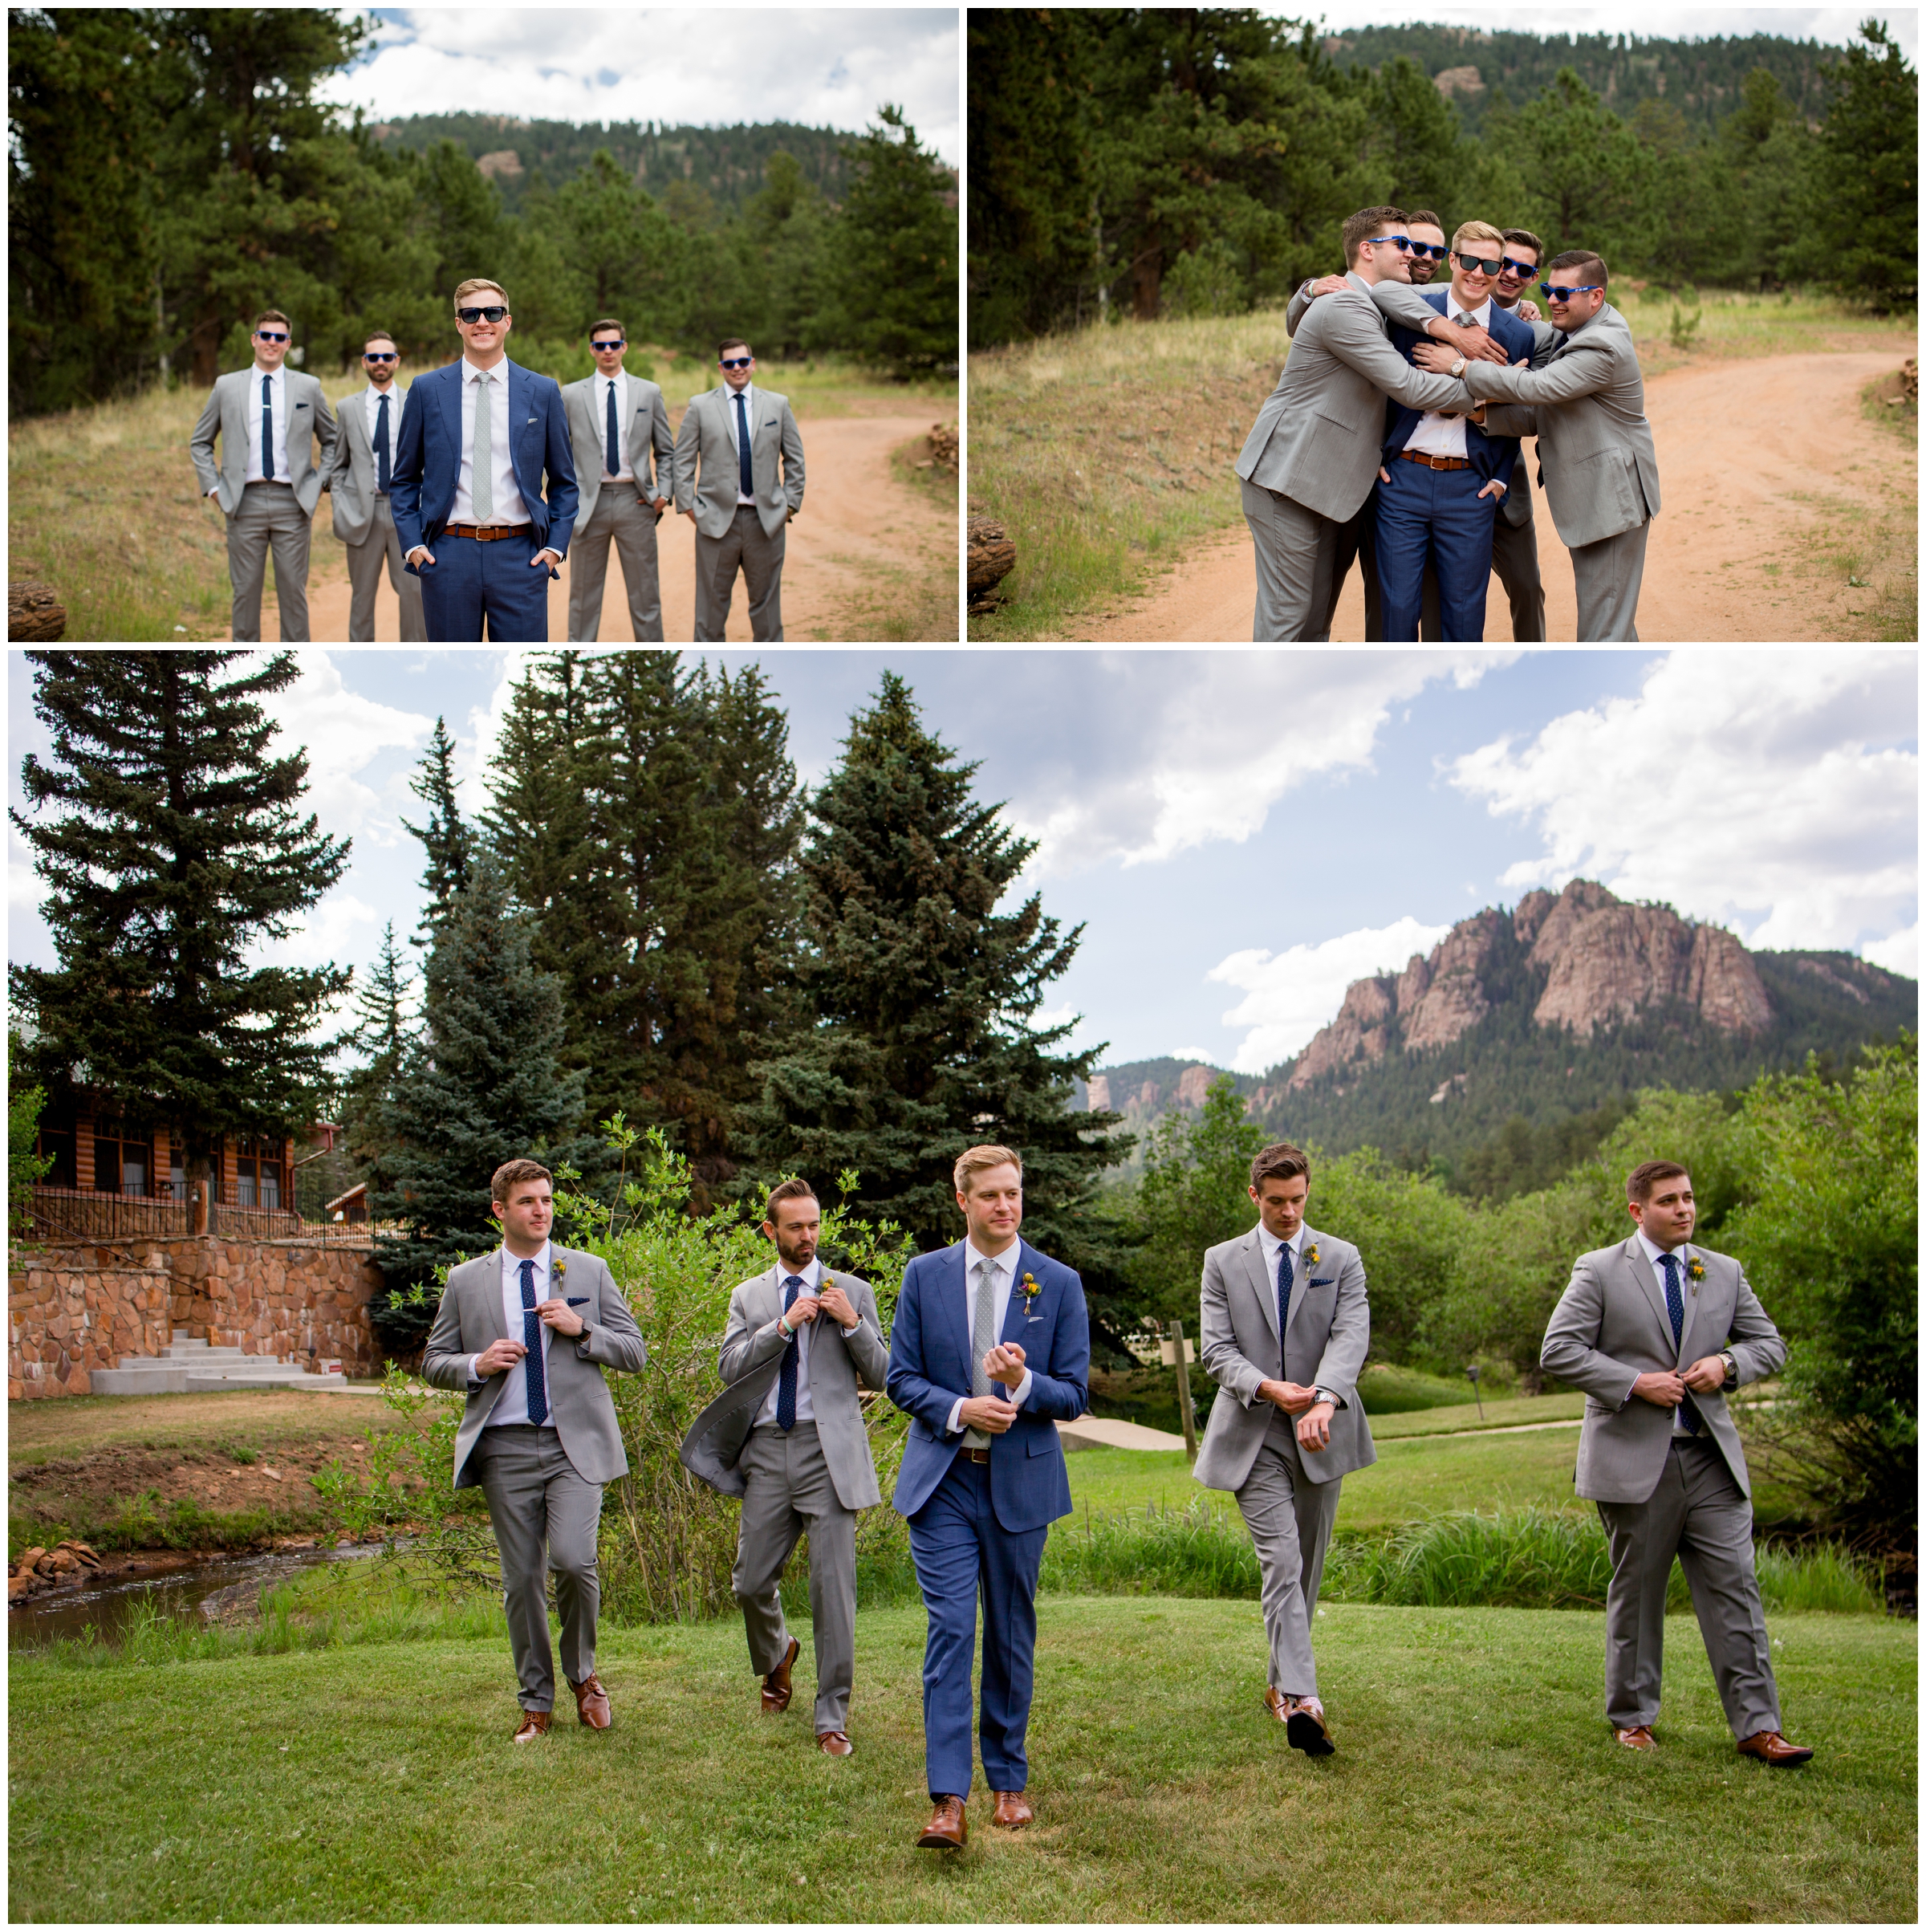 unique groom and groomsmen photos by Pine Colorado photographer Plum Pretty Photography 